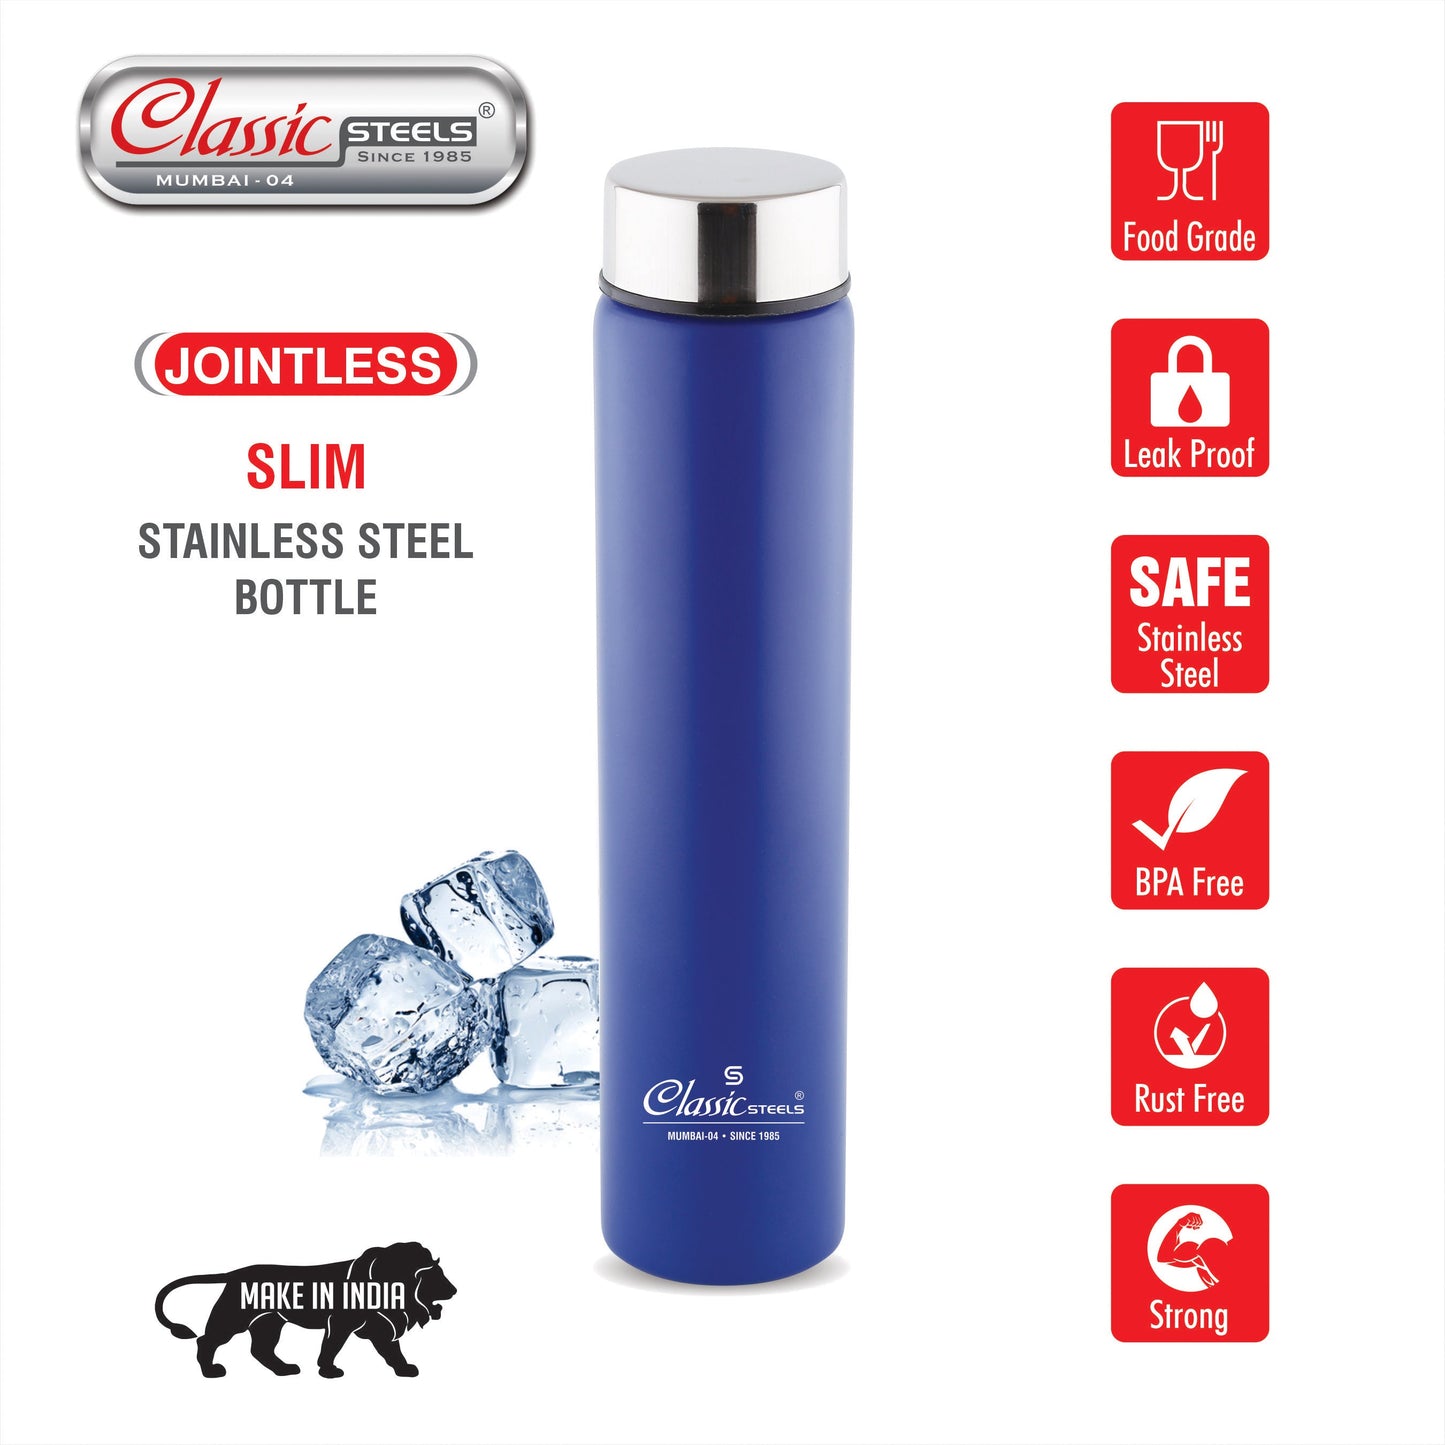 Slim (jointless) Single Wall Stainless Steel Classic Steels